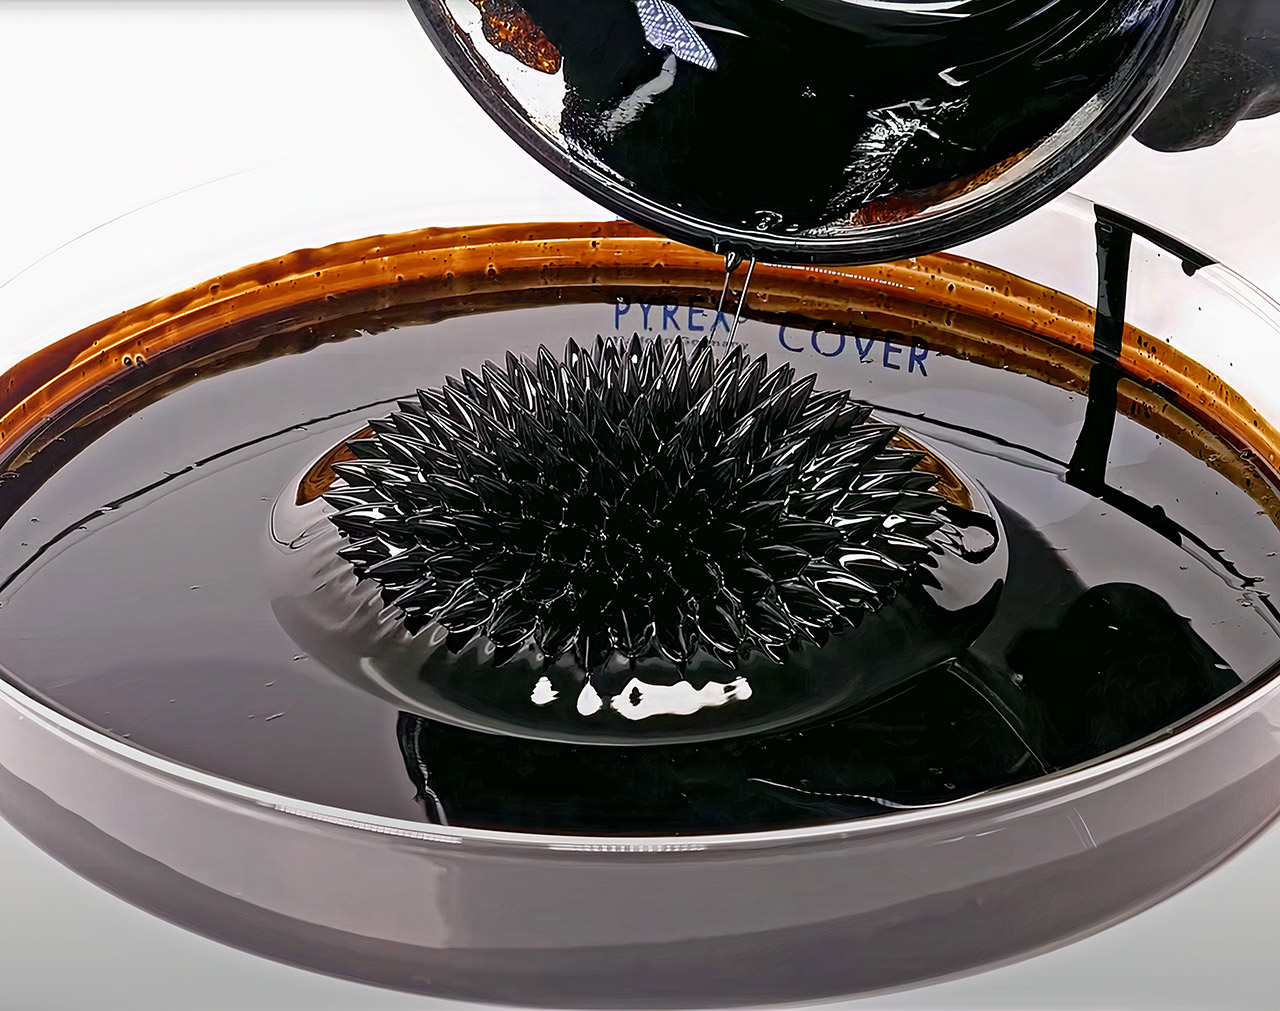 How to Make Ferrofluid